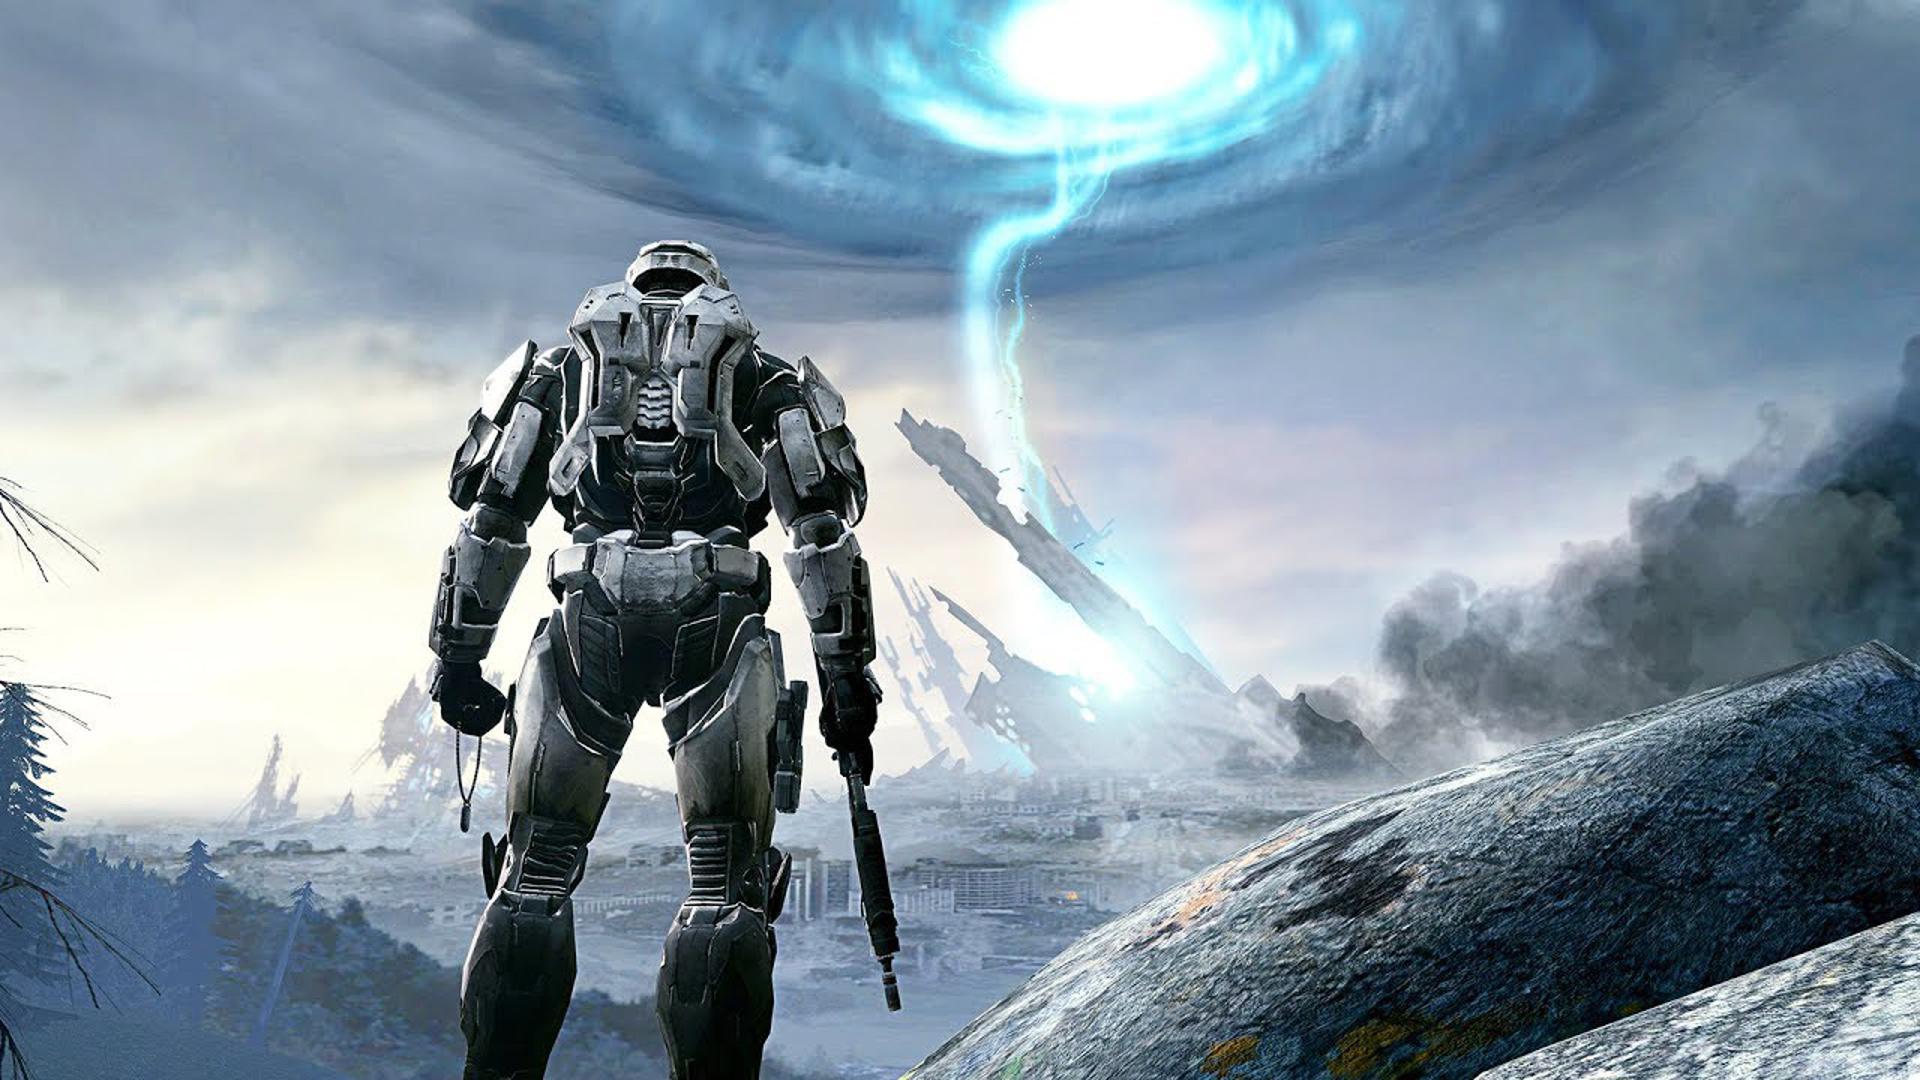 Halo Infinite trebao bi biti novi veliki adut Xboxa

